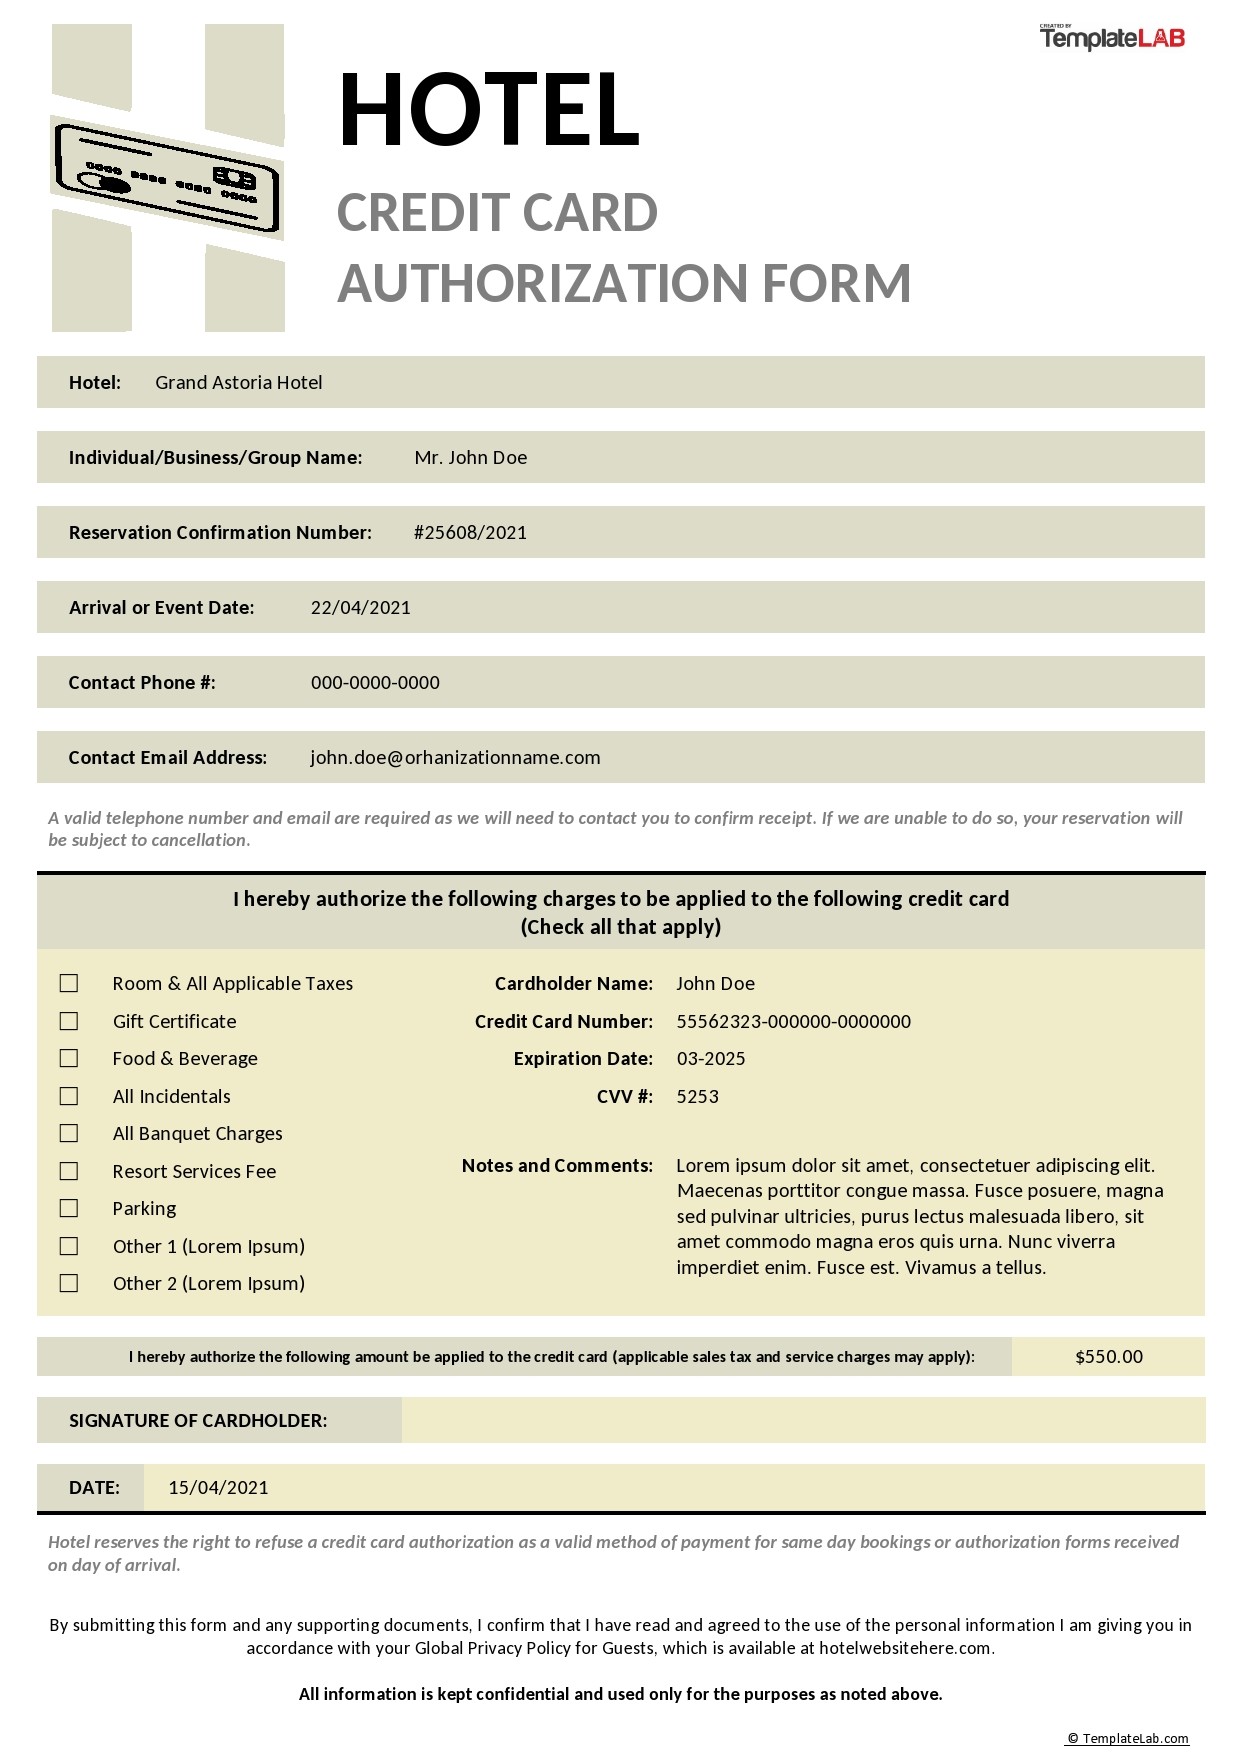 Free Hotel Credit Card Authorization Form 02 - TemplateLab.com